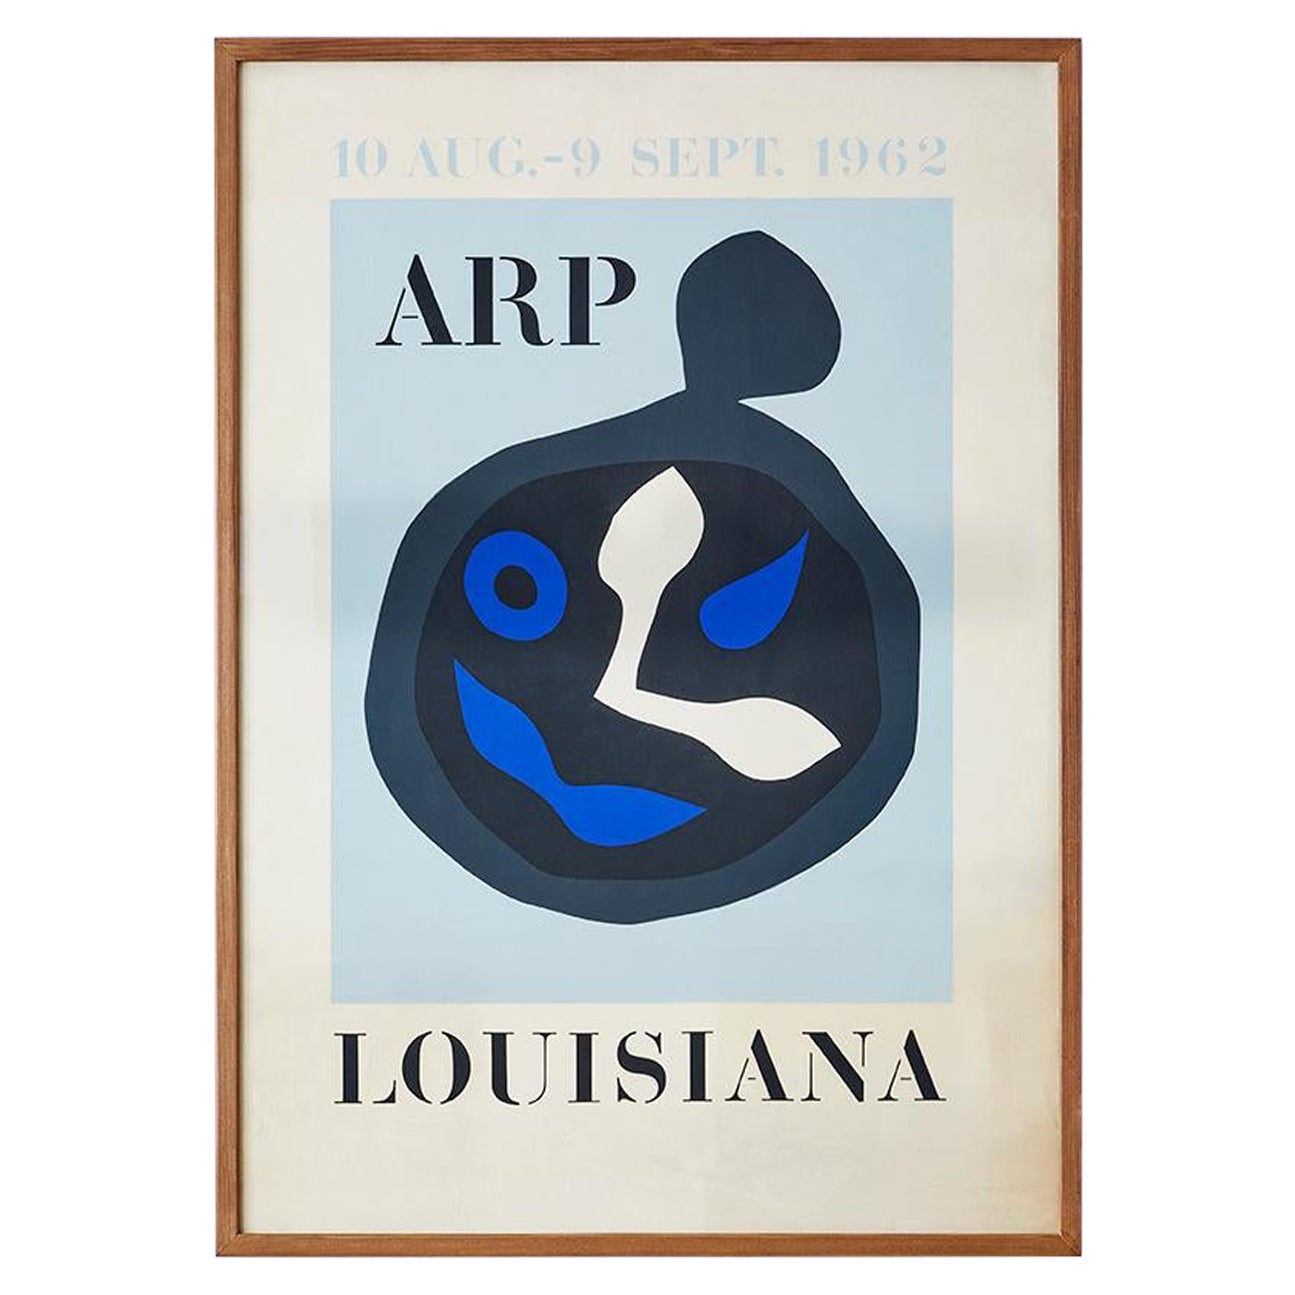 Vintage Jean Arp Louisiana Museum Exhibition Poster “Arp”, Denmark, 1958